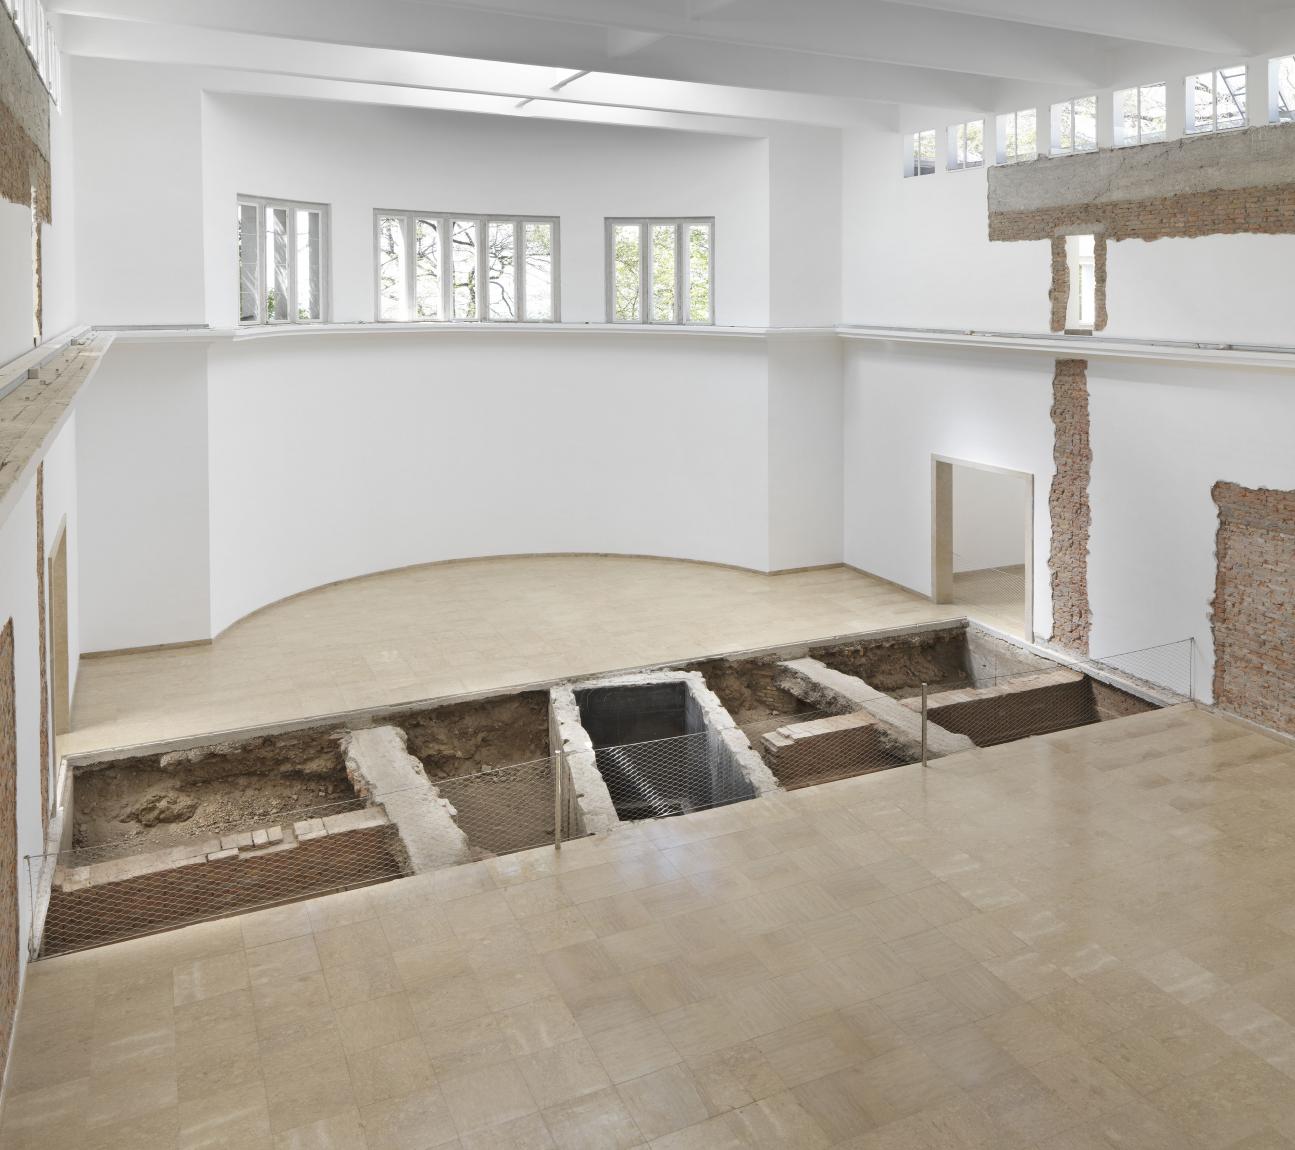 Maria Eichhorn "Relocating a Structure", Deutscher Pavillon 2022, 59. Internationale Kunstausstellung – La Biennale di Venezia, 2022,